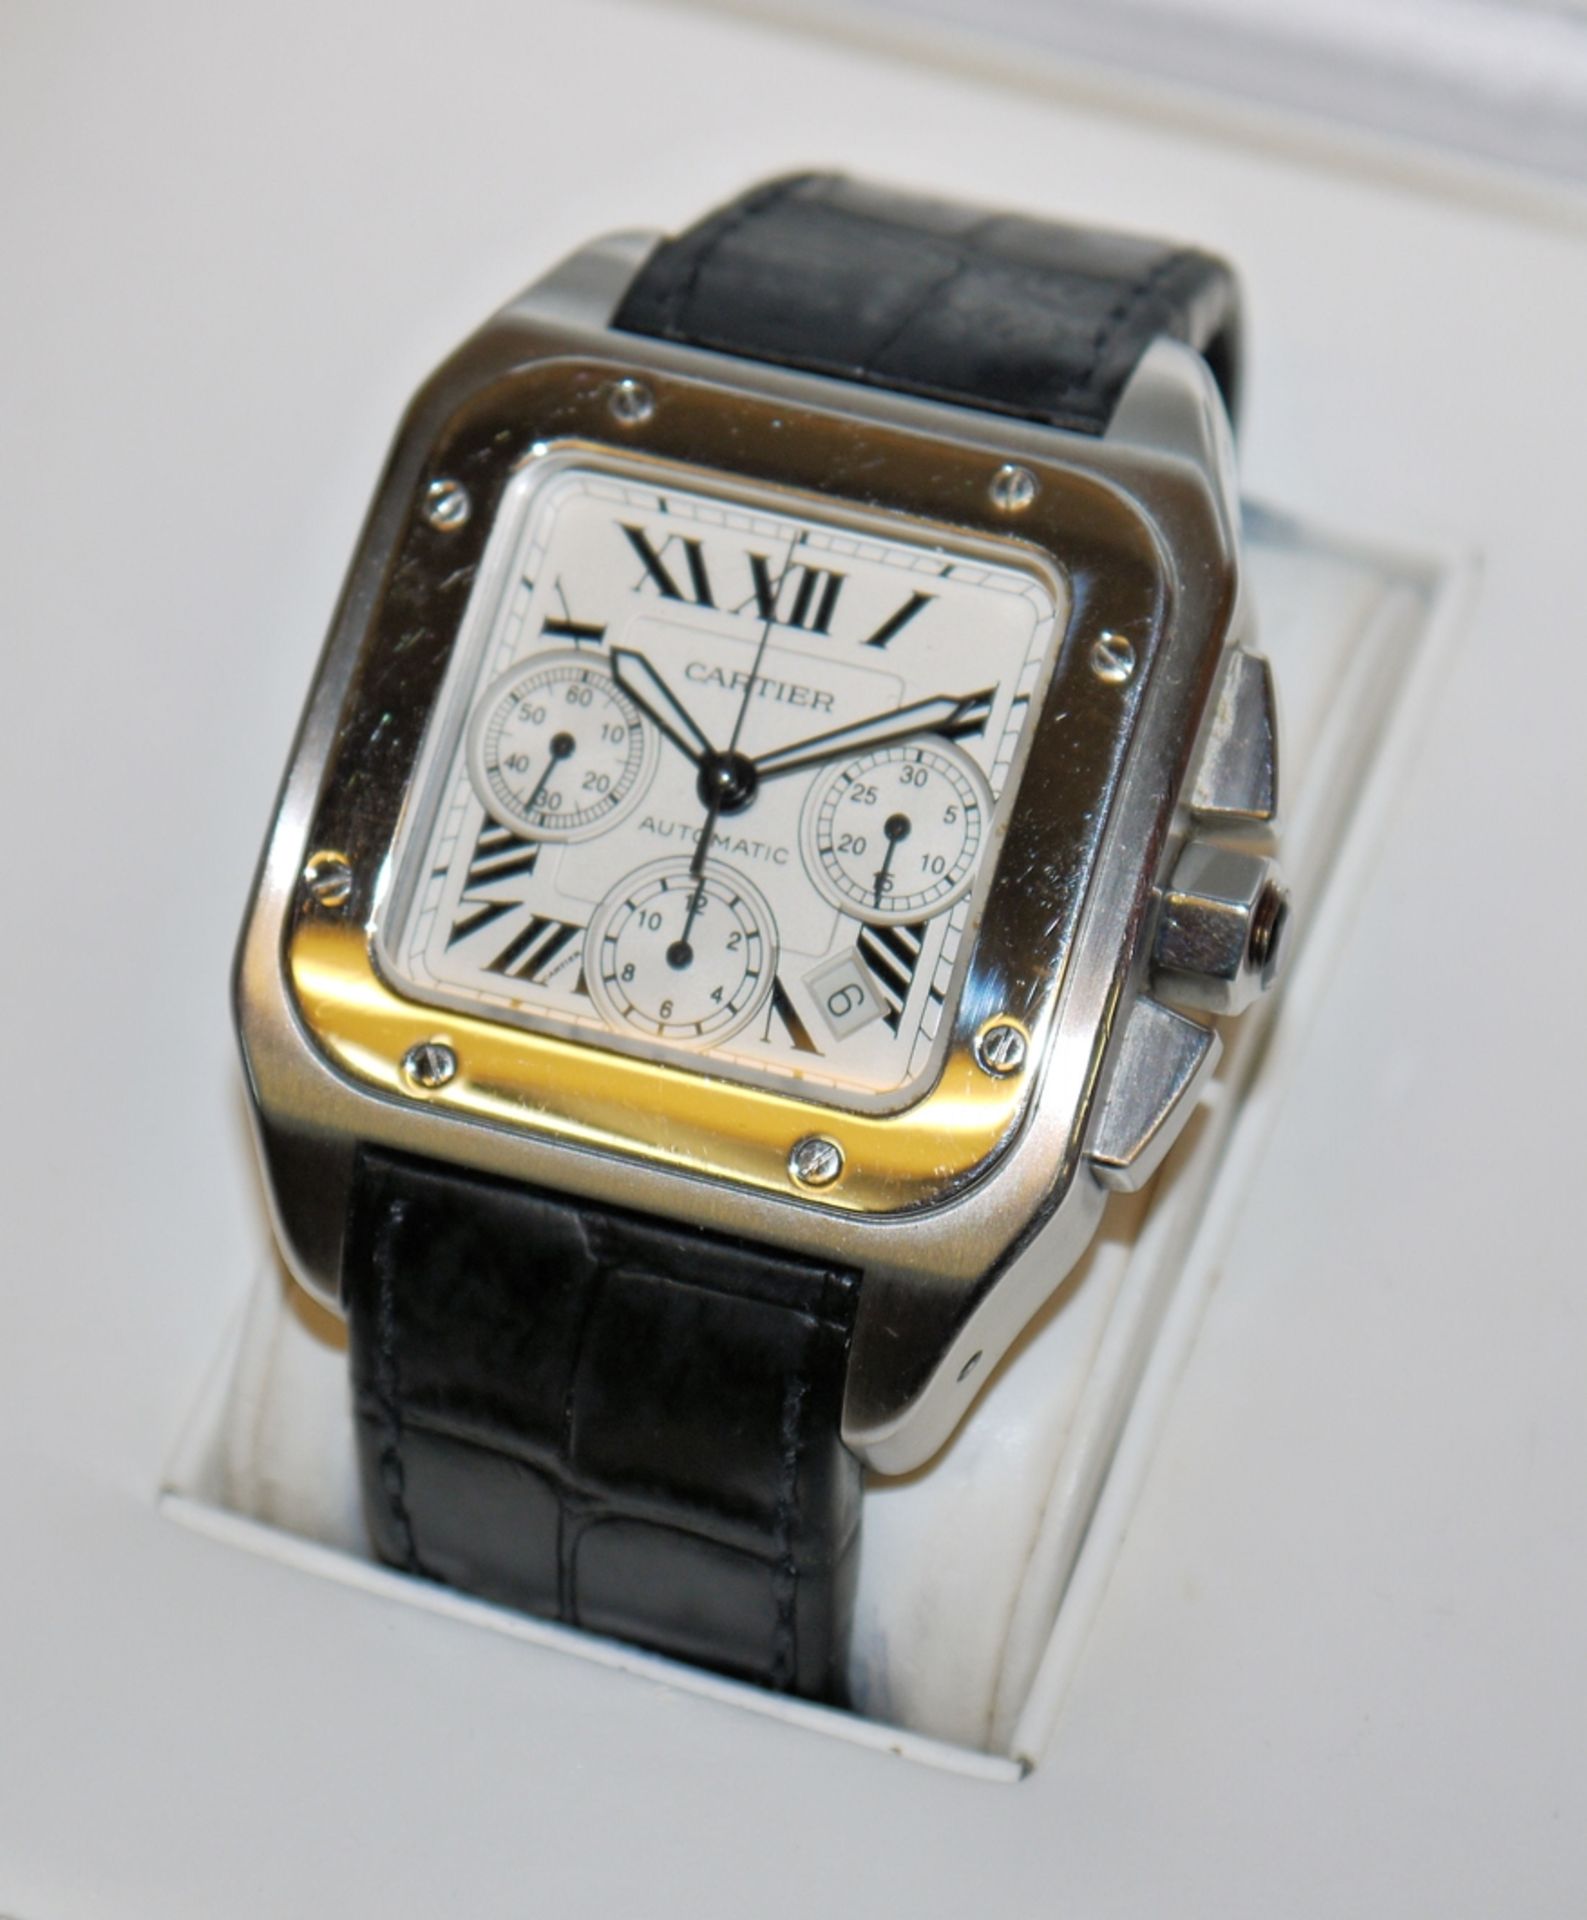 Santos de Cartier 100 XL, automatic men's chronograph 2740 from 2006 - Image 2 of 3